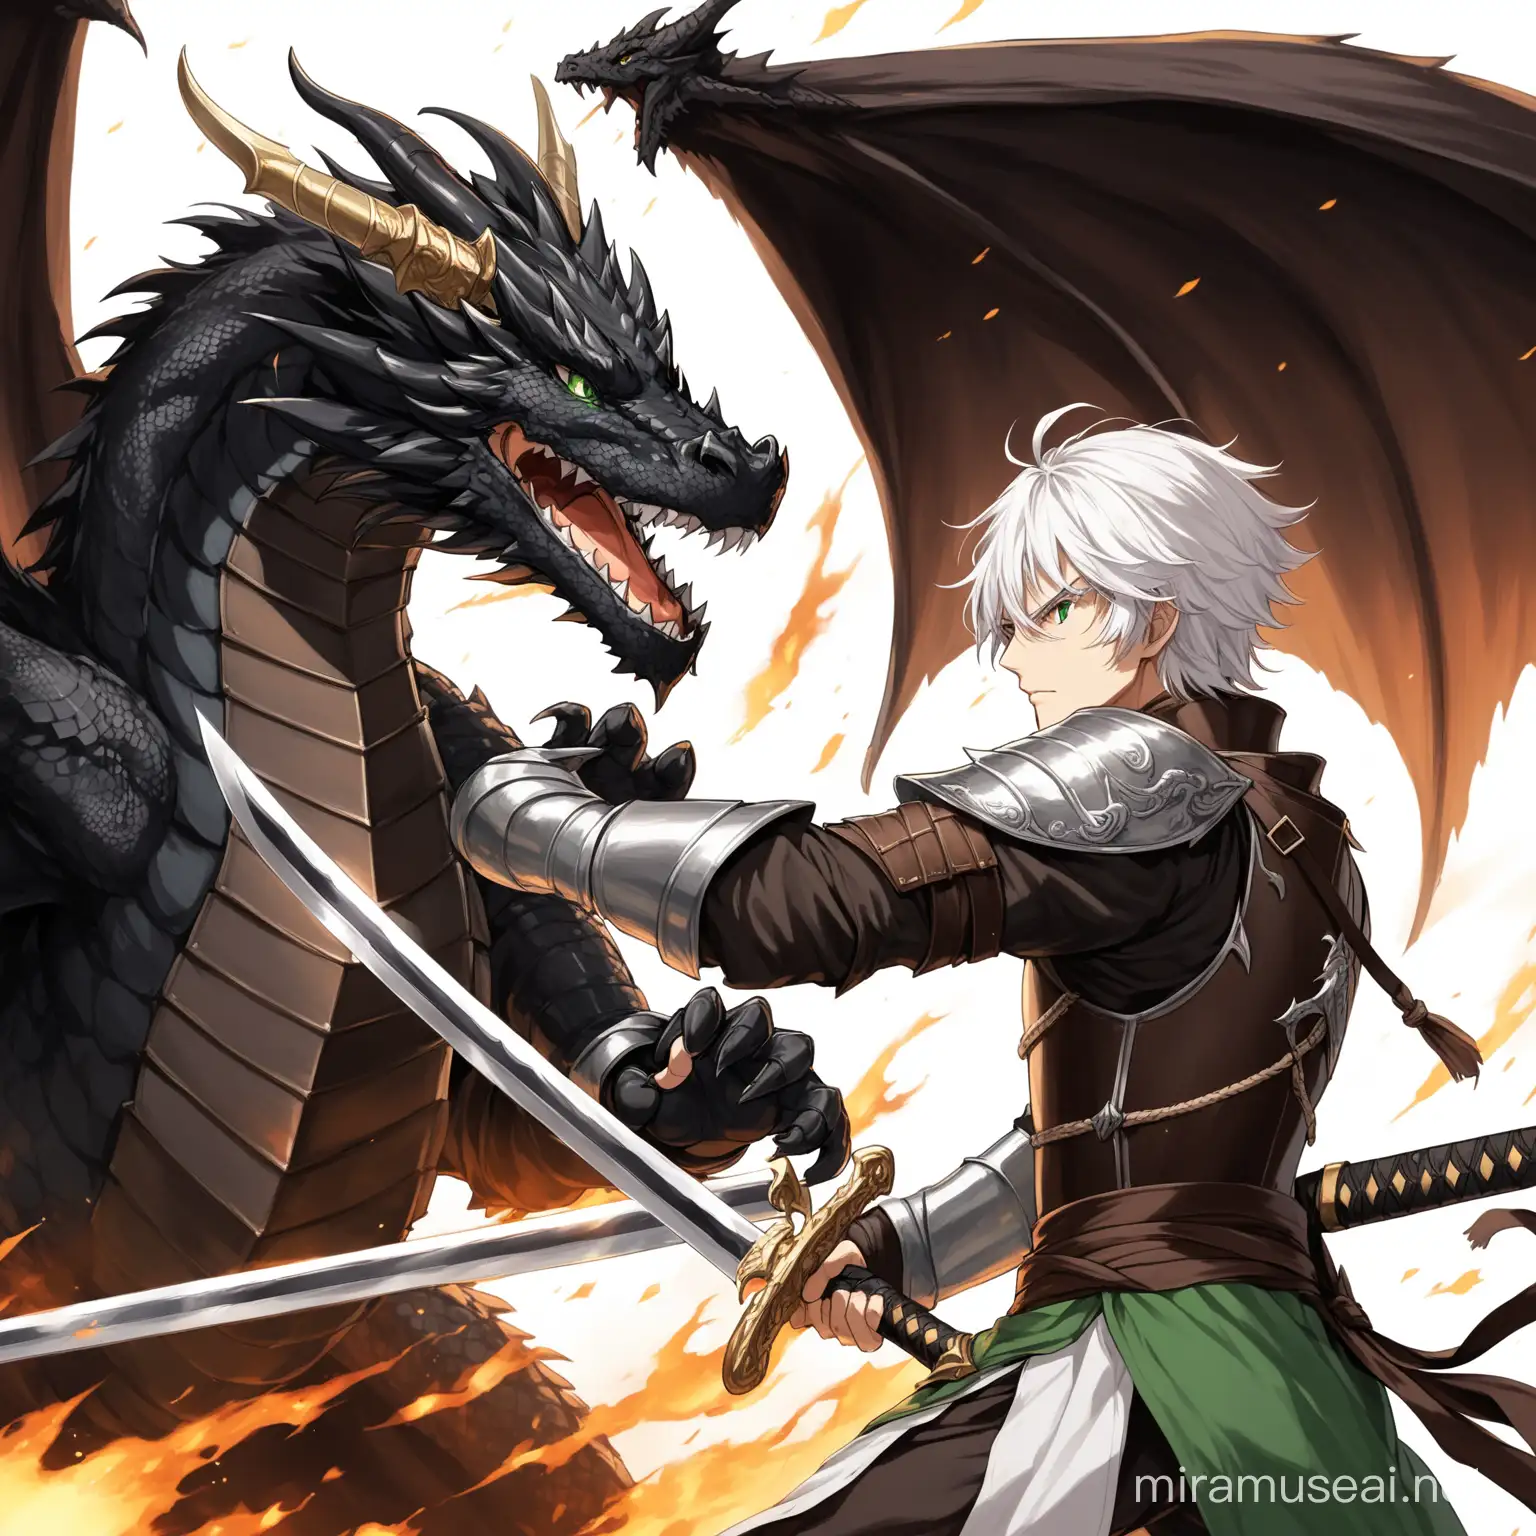 Courageous WhiteHaired Swordsman Battles Black Dragon in Dark Brown Armor